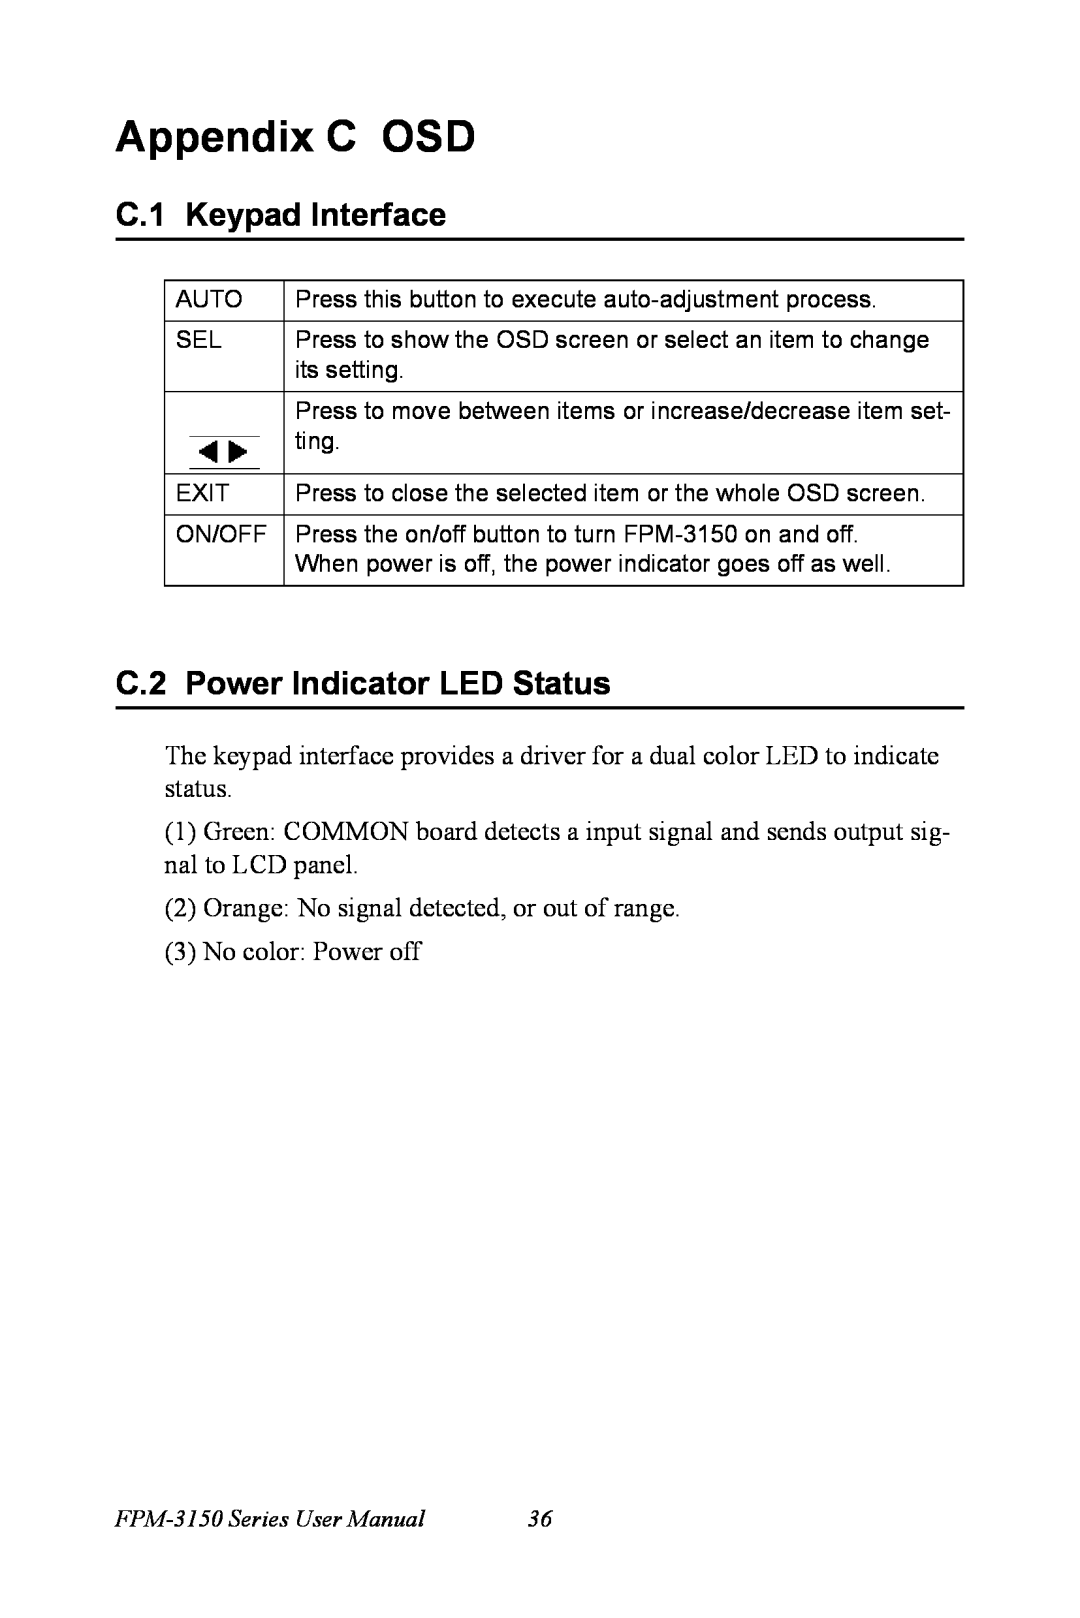 Advantech FPM-3150 Series user manual Appendix C OSD, C.1 Keypad Interface, C.2 Power Indicator LED Status 